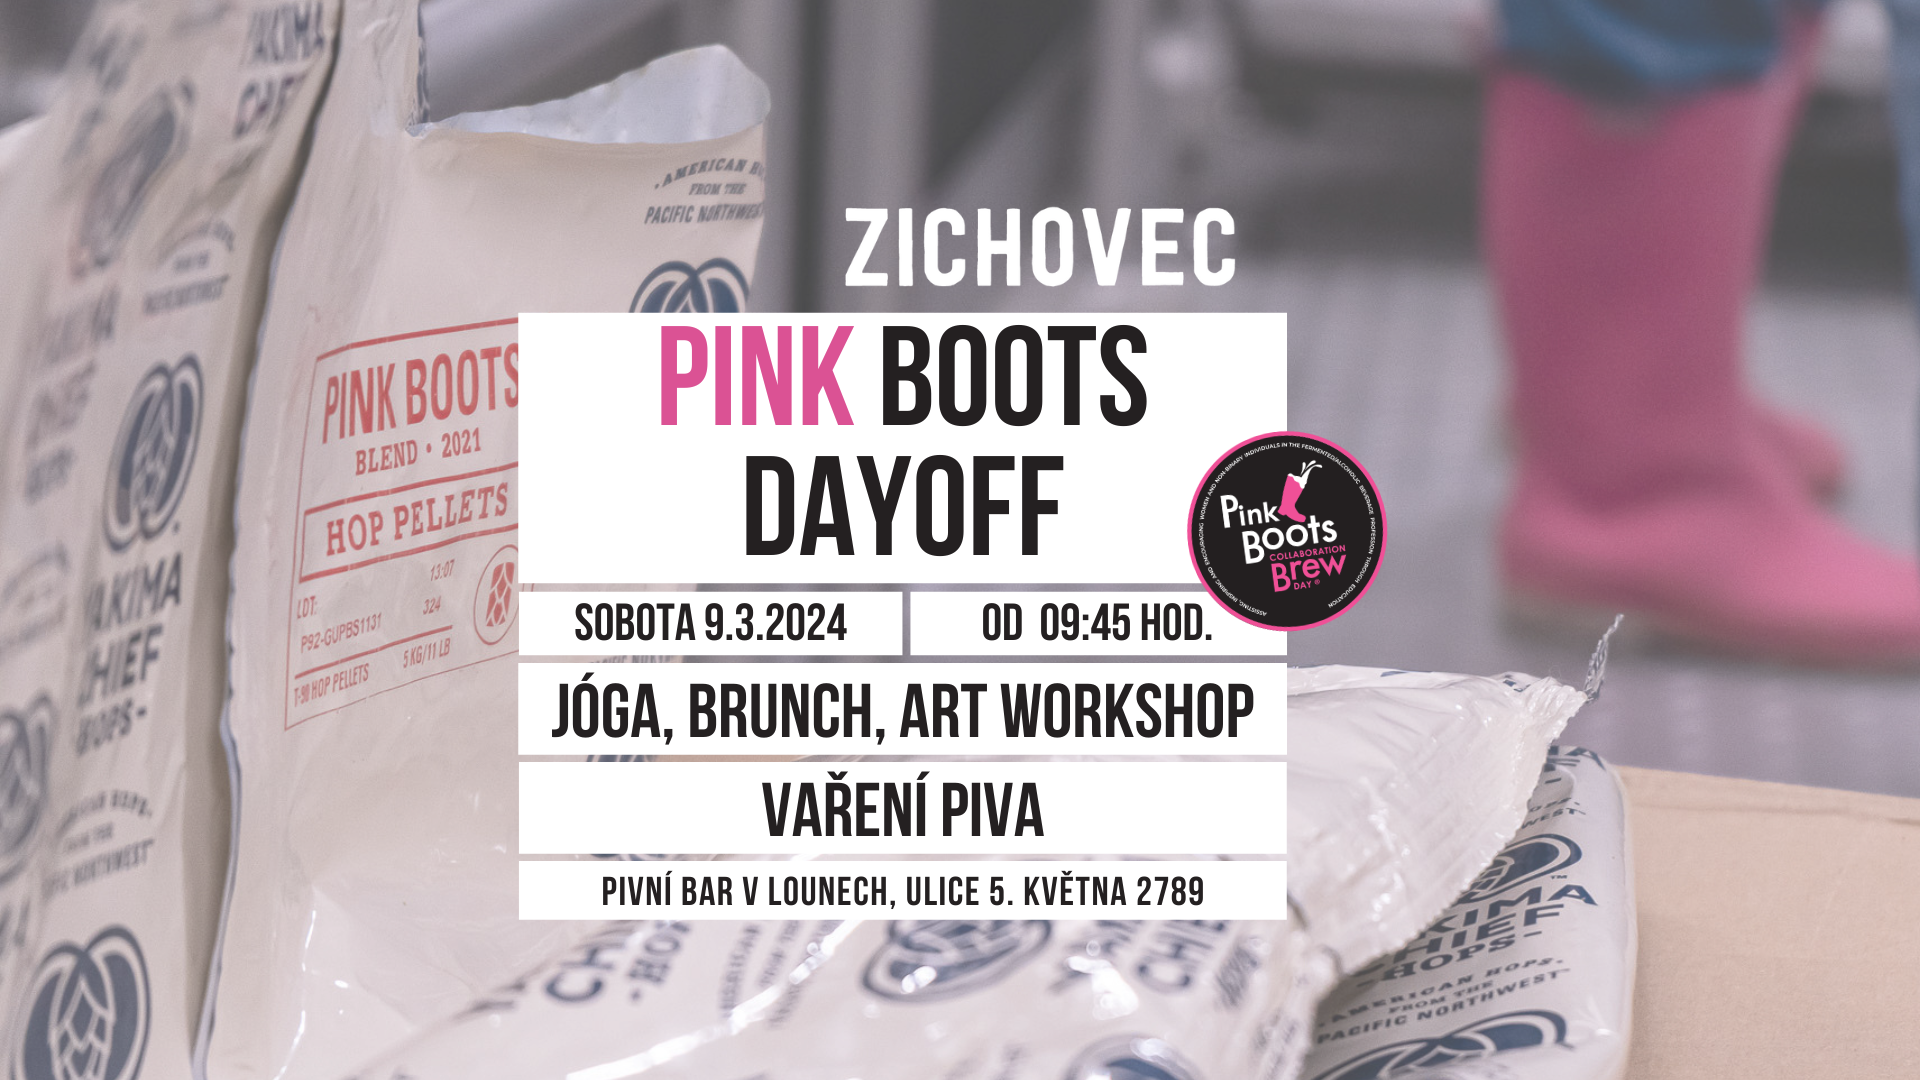 udalost pinkboots dayoff » Pivovar Zichovec